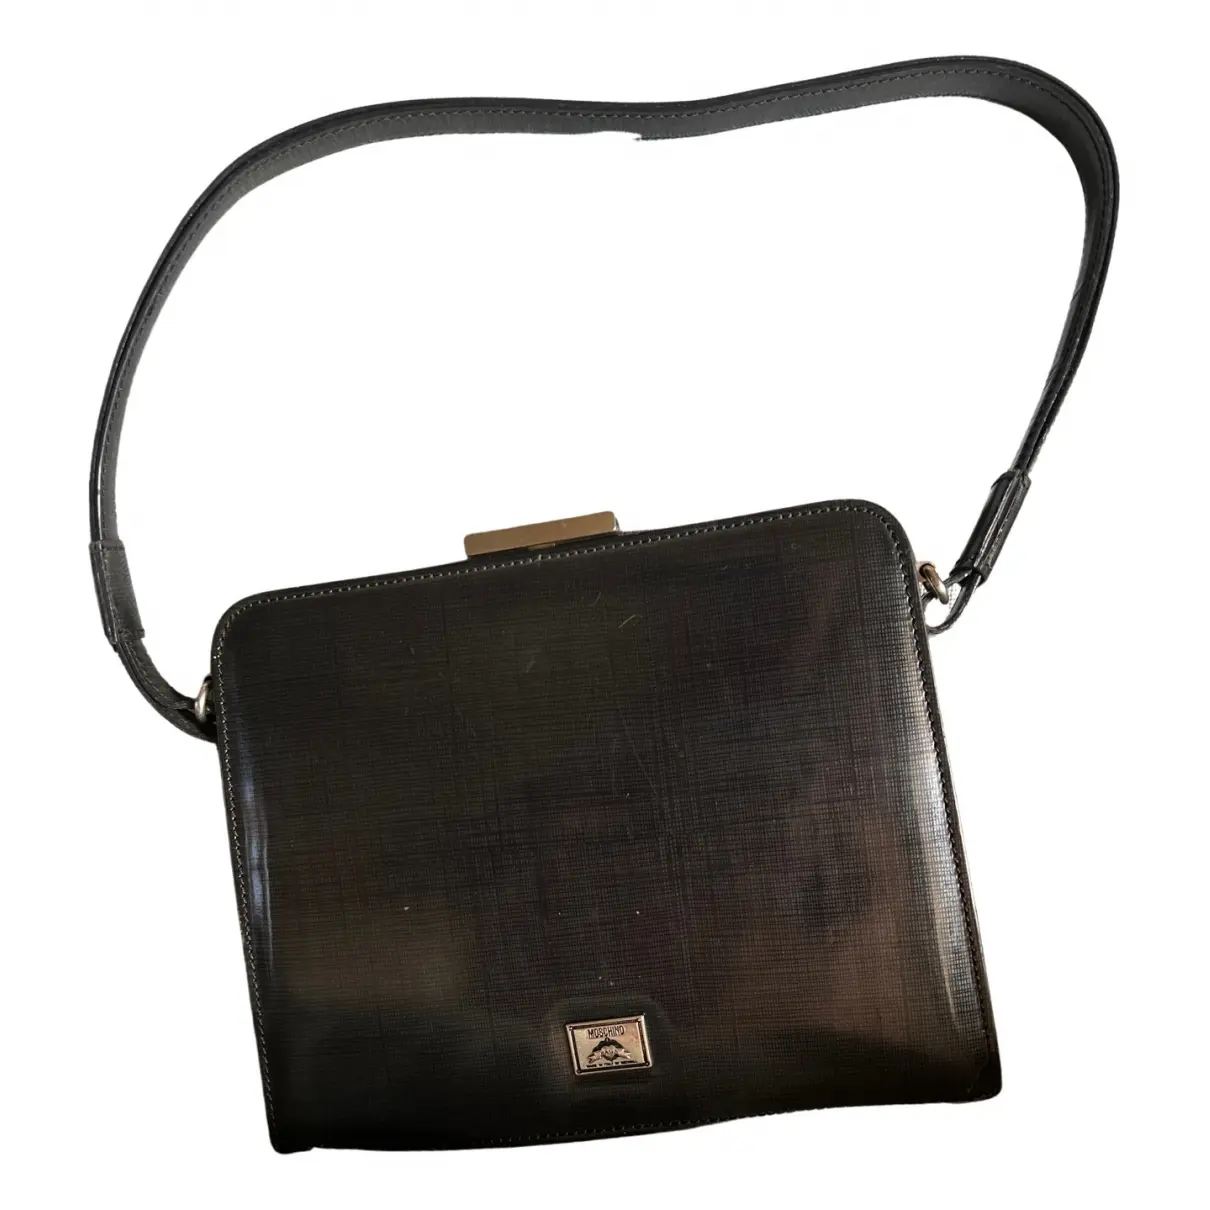 Patent leather handbag Moschino - Vintage